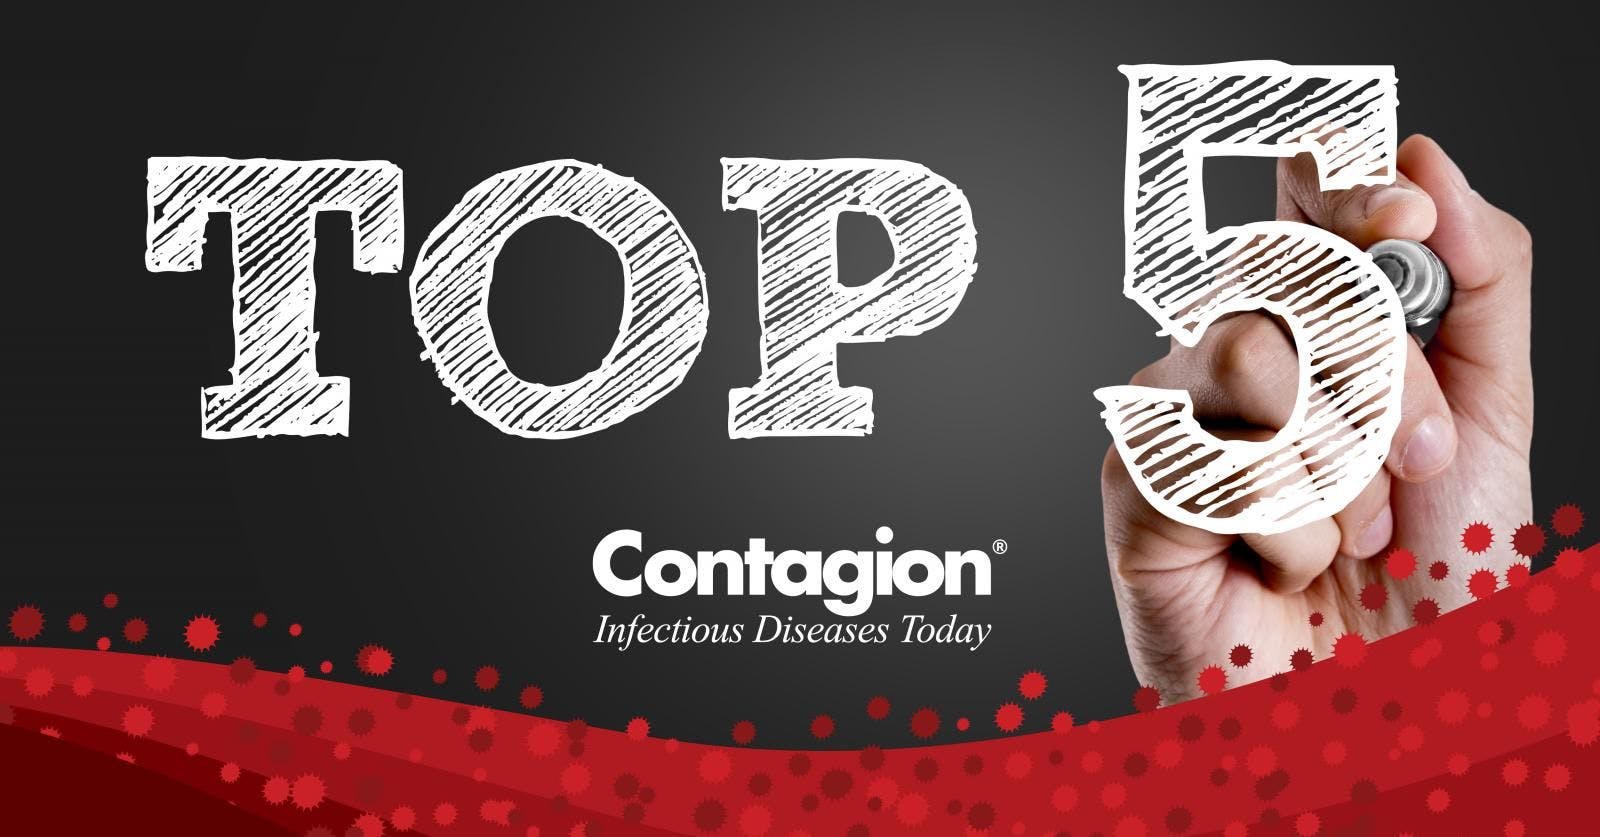 Top Infectious Disease News of the Week&mdash;November 24, 2019